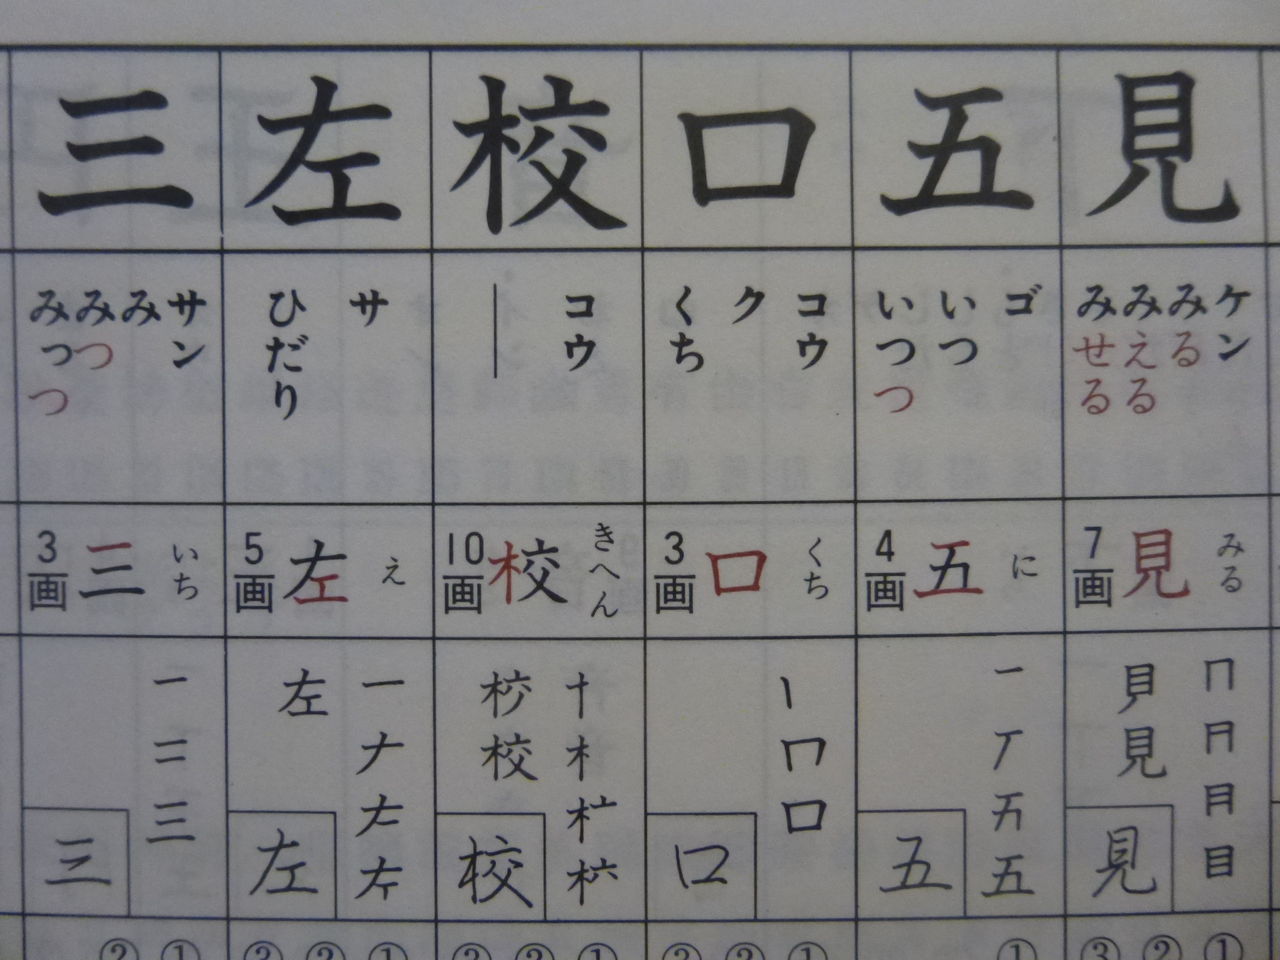 Kanji On Yomi And Kun Yomi 音読みと訓読み Japanese Language And Culture